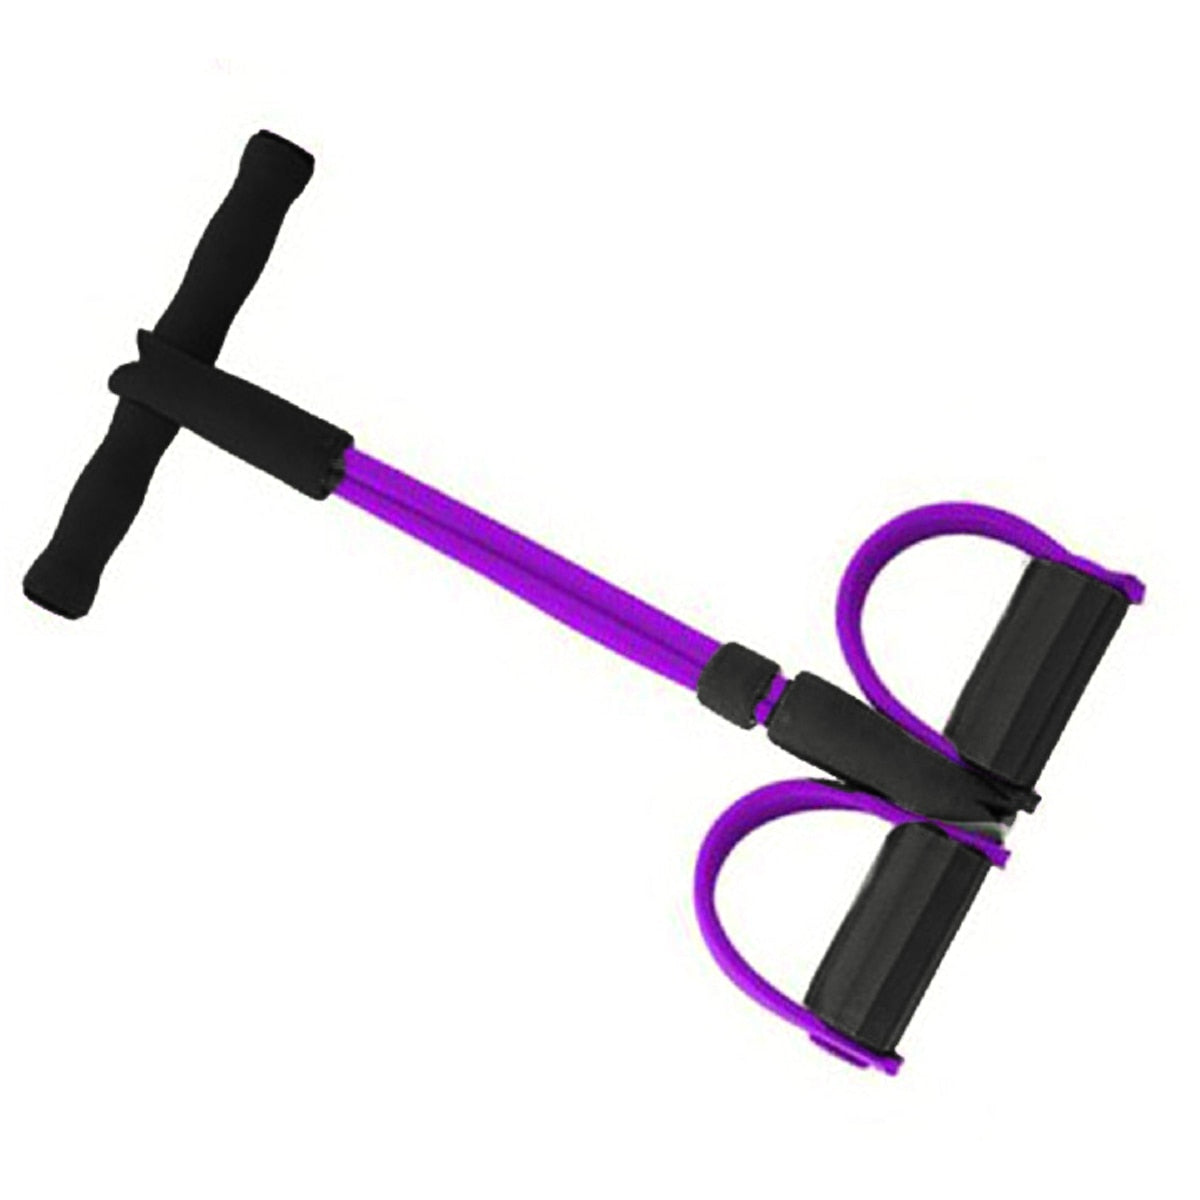 Pull Rope Resistance Band in Purple - Thefitnesshut.com